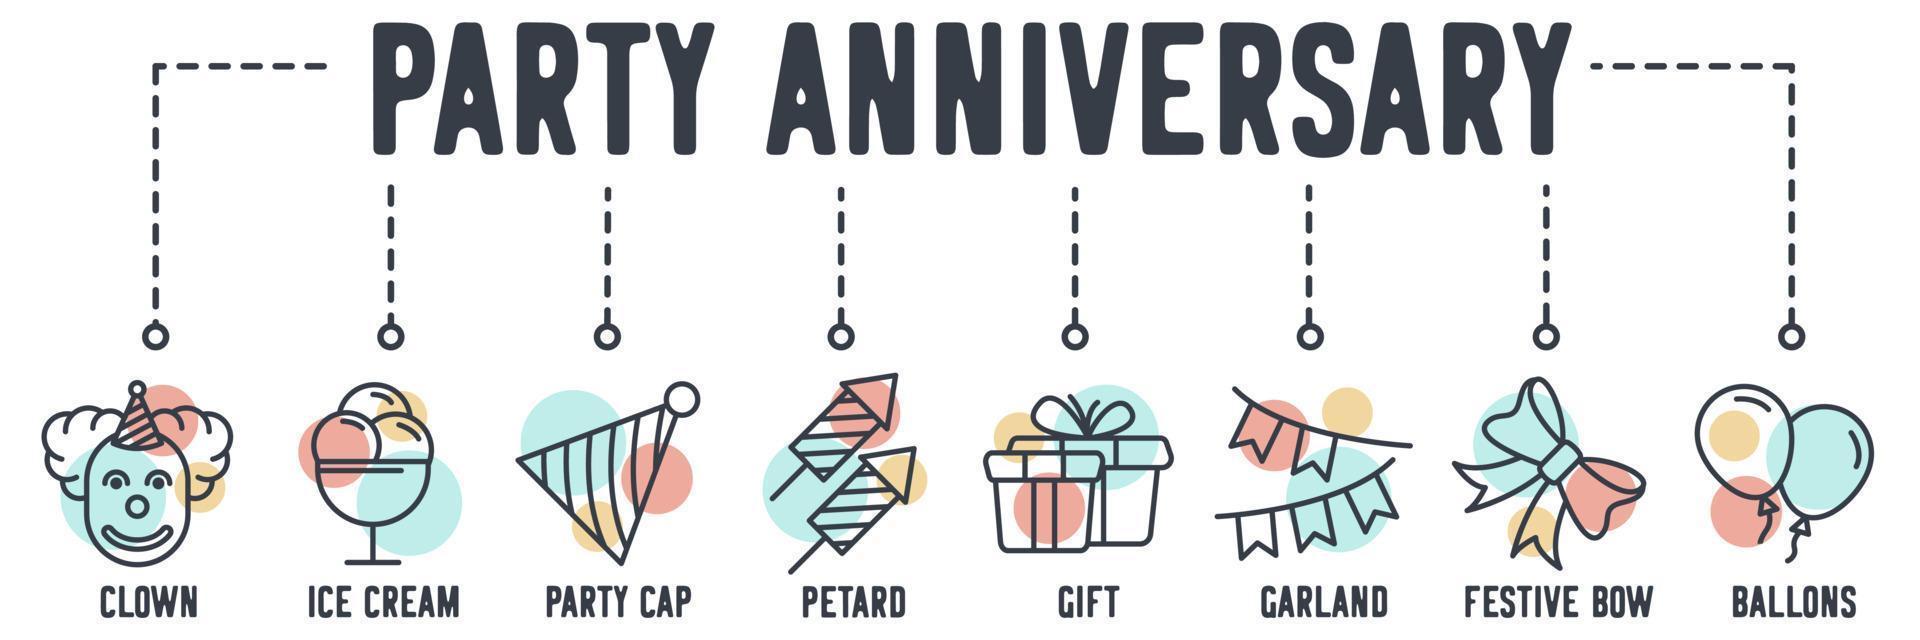 Party Anniversary banner web icon. clown, ice cream, party cap, petard, gift, garland, festive bow, ballons vector illustration concept.